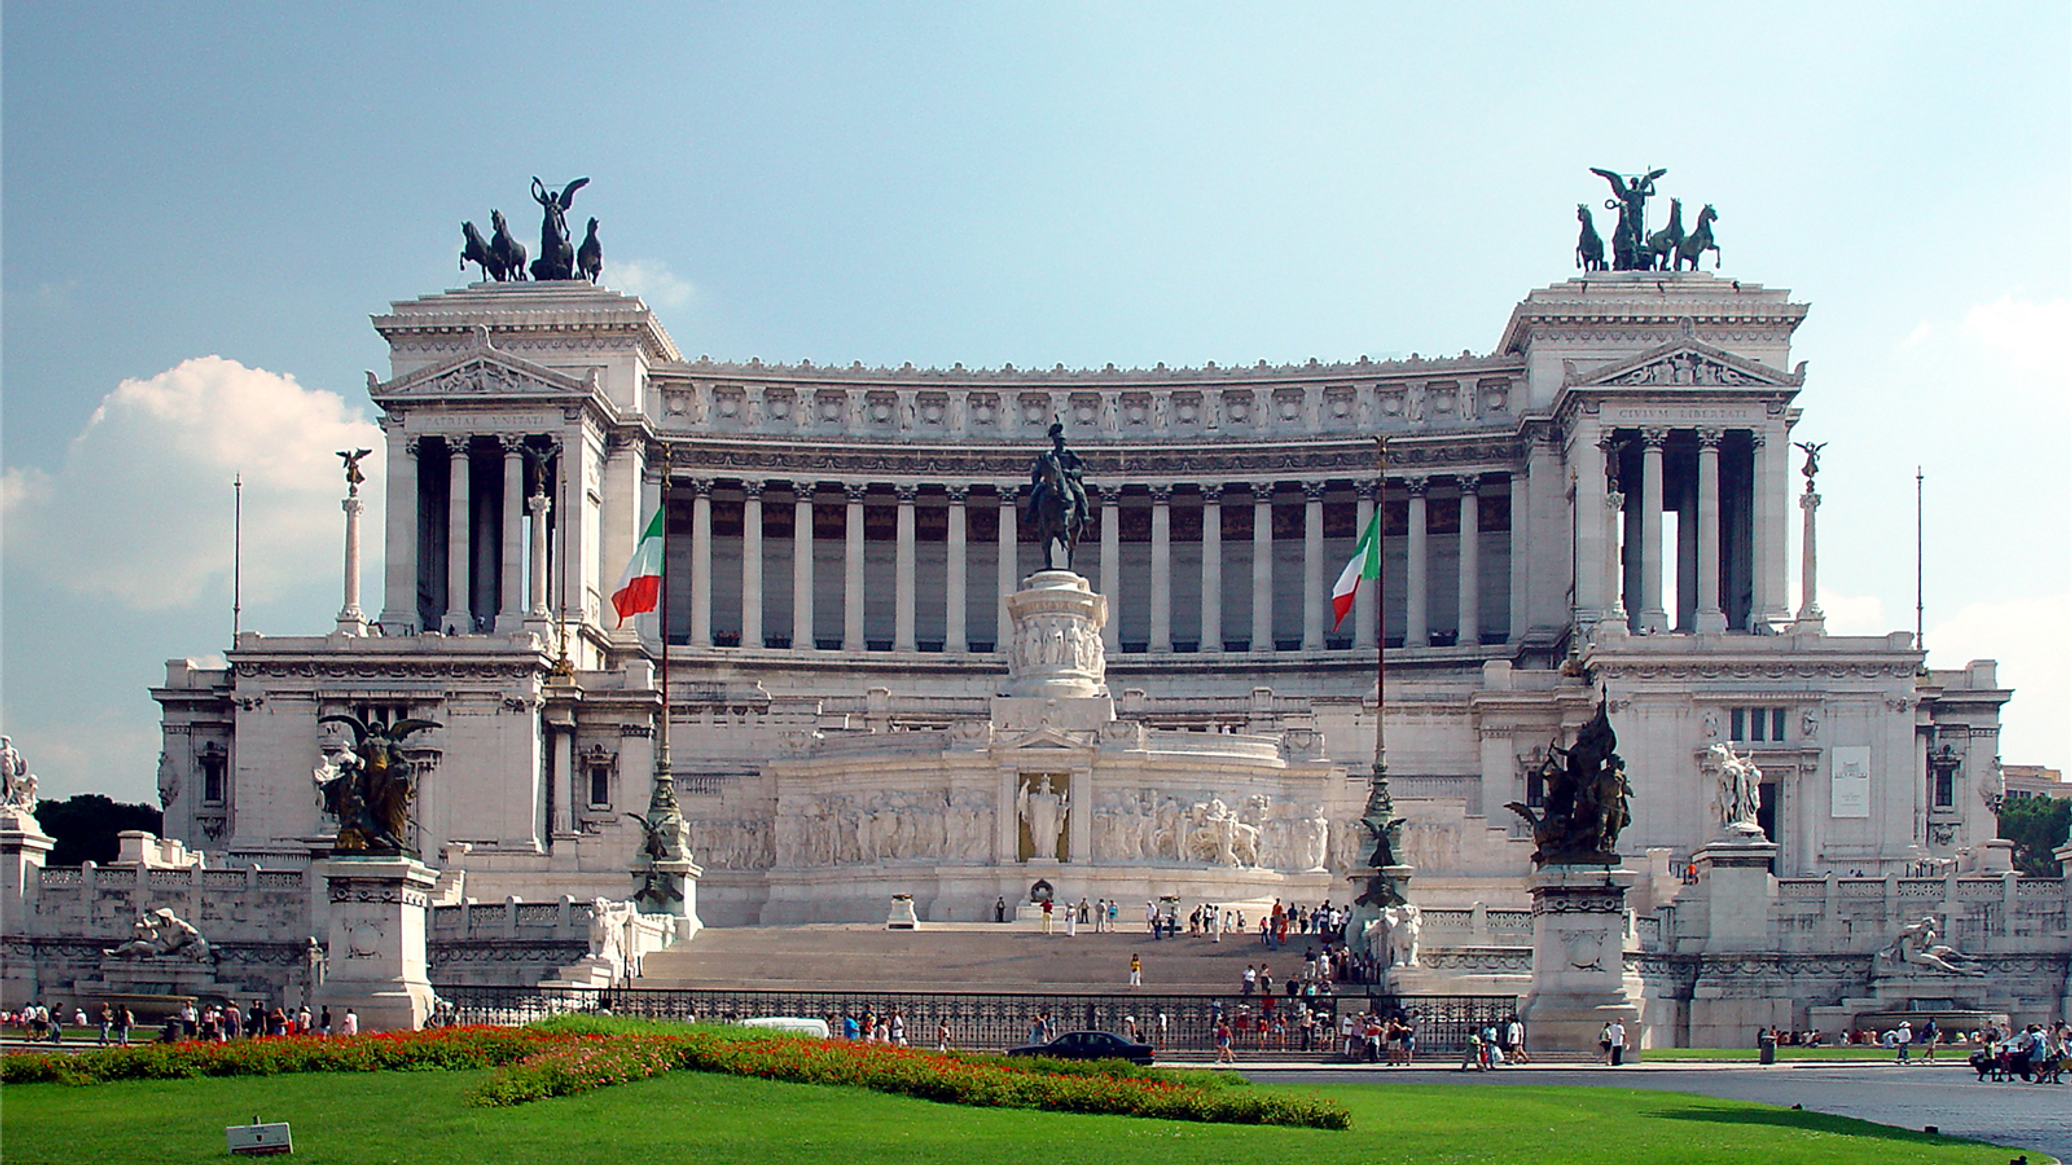 Government italy. Рим правительство Италии. Здание правительства Италии в Риме. Рим здание парламента. Италия столица Рим здание правительства.